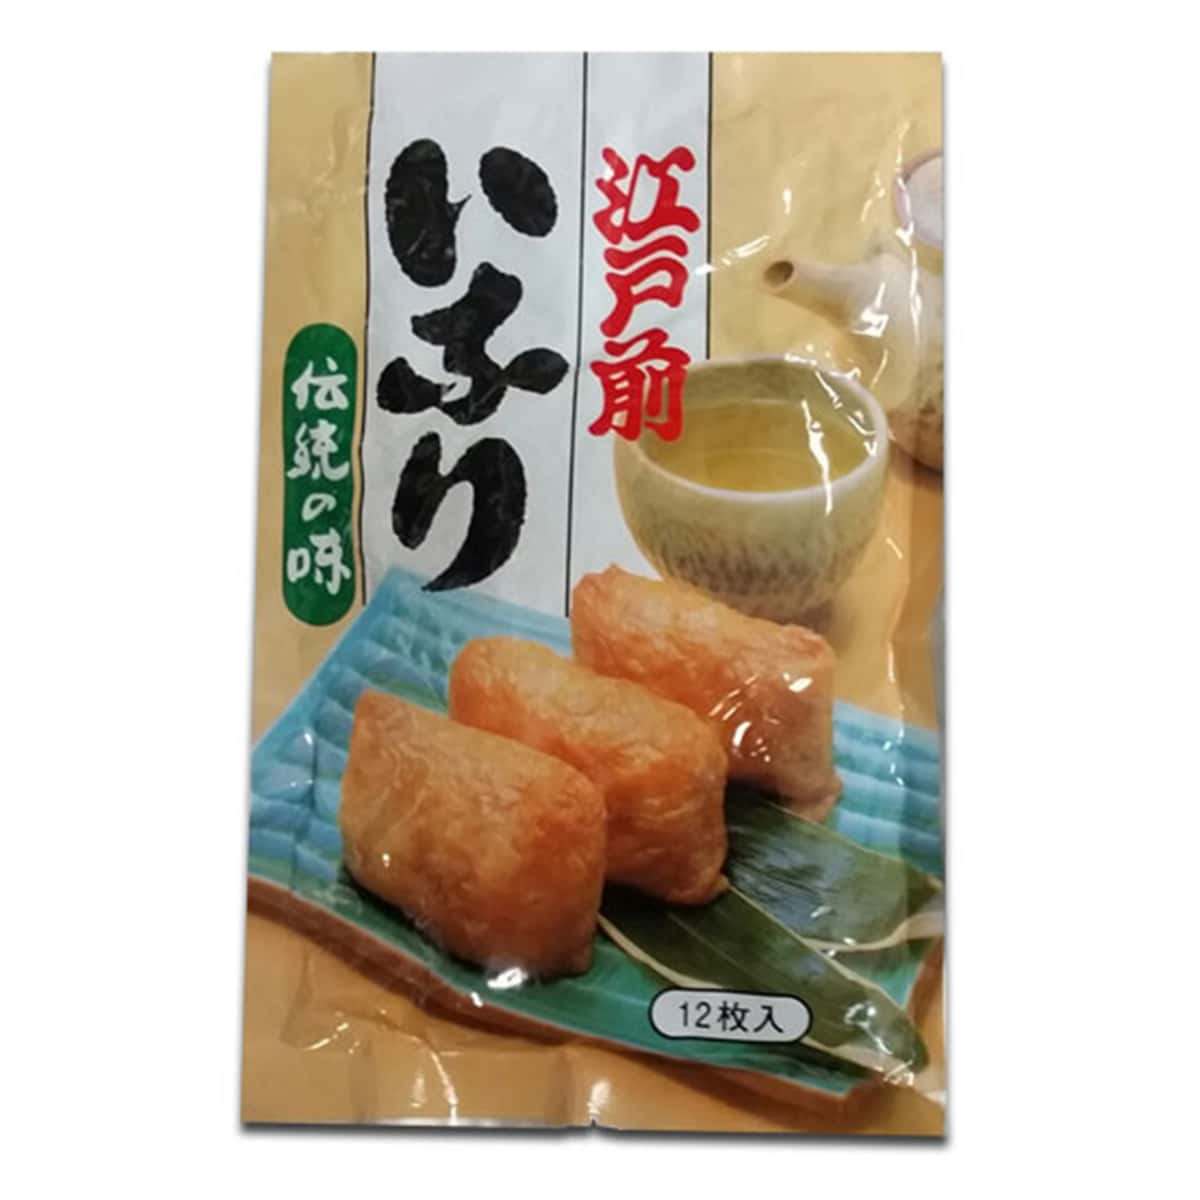 Buy Yamato Inari Tofu Pockets (Fried Bean Curd Pouches) 12 Pcs - 250 gm